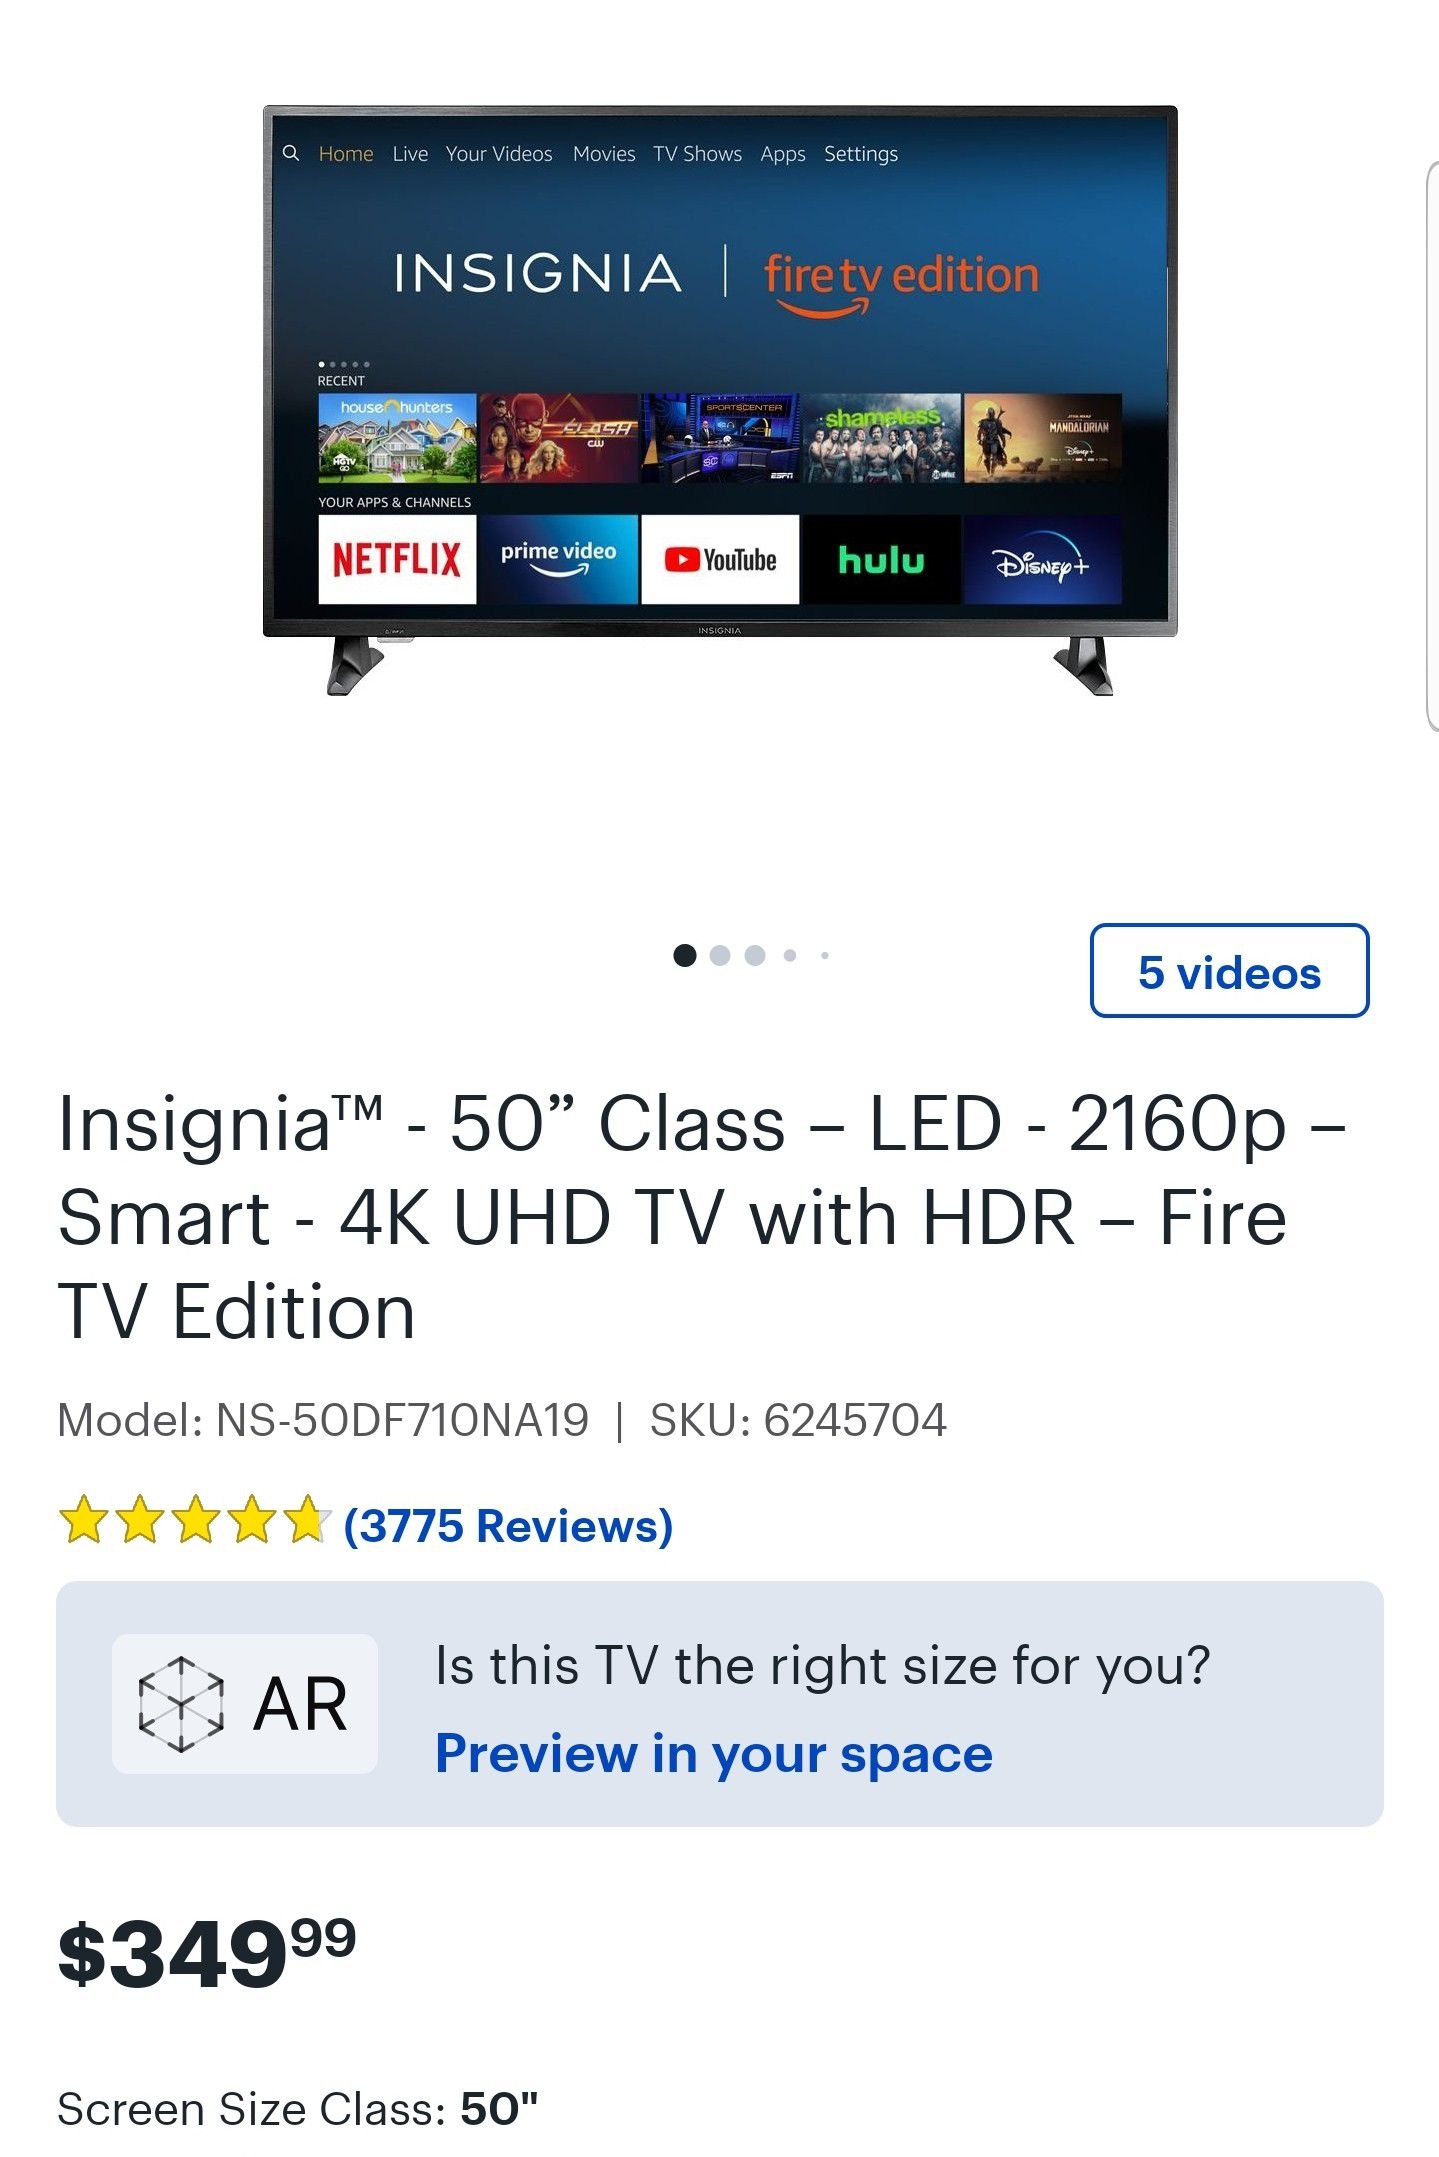 INSIGNIA fire 50 LED TV 4K Ultra HD